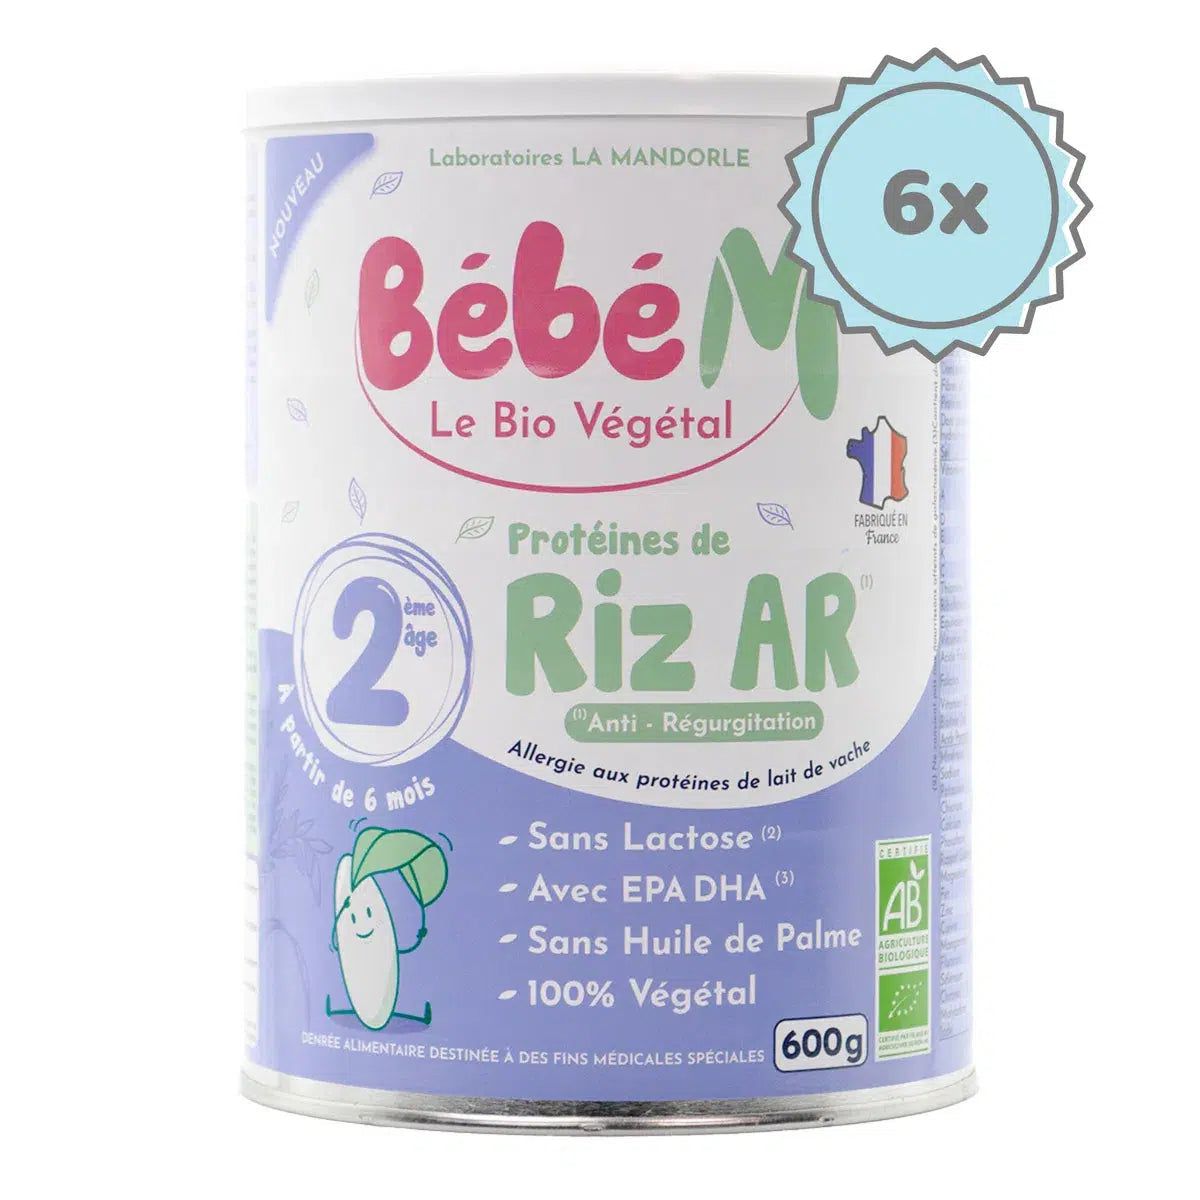 Bebe M (Bebe Mandorle) Organic Anti-Reflux Rice-Based Formula - Stage 2 (6+ months) | Organic Baby Formula | 6 cans